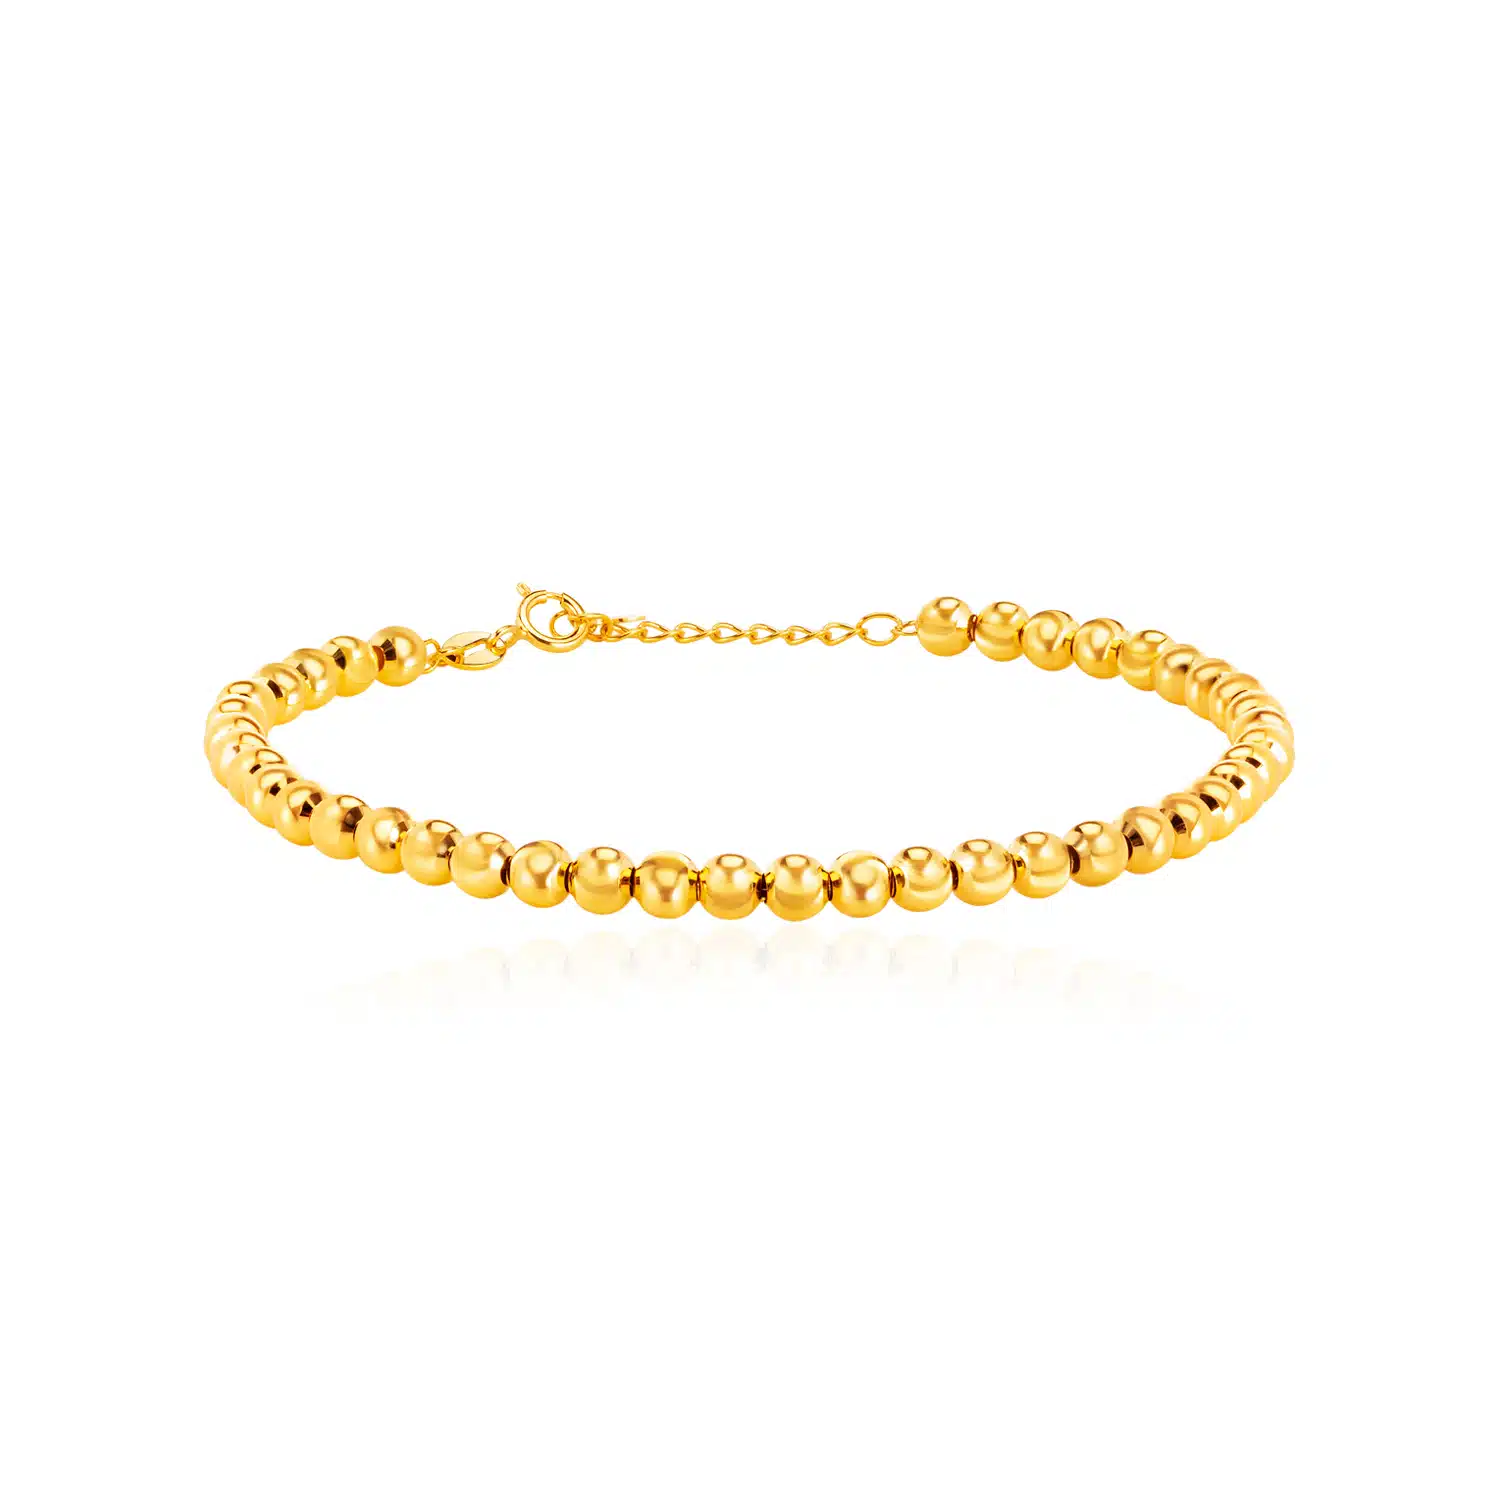 Classy Dubai Handmade 7.50 Inch Ball Beads Bracelet In 916 Solid 22K Yellow  Gold | eBay